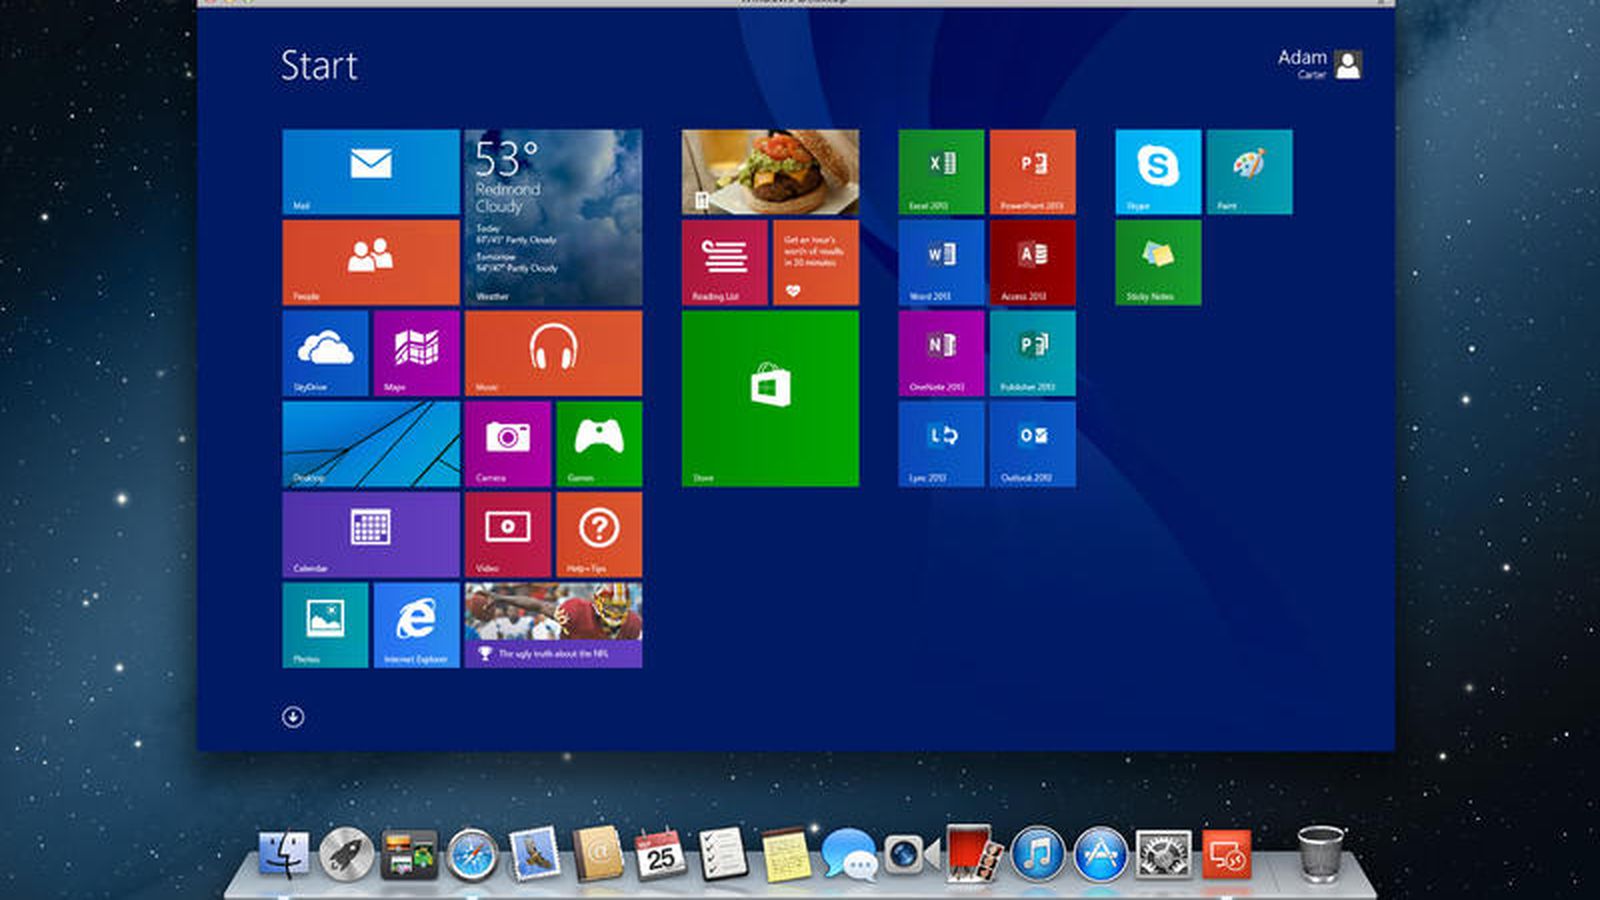 remote desktop to mac from windows